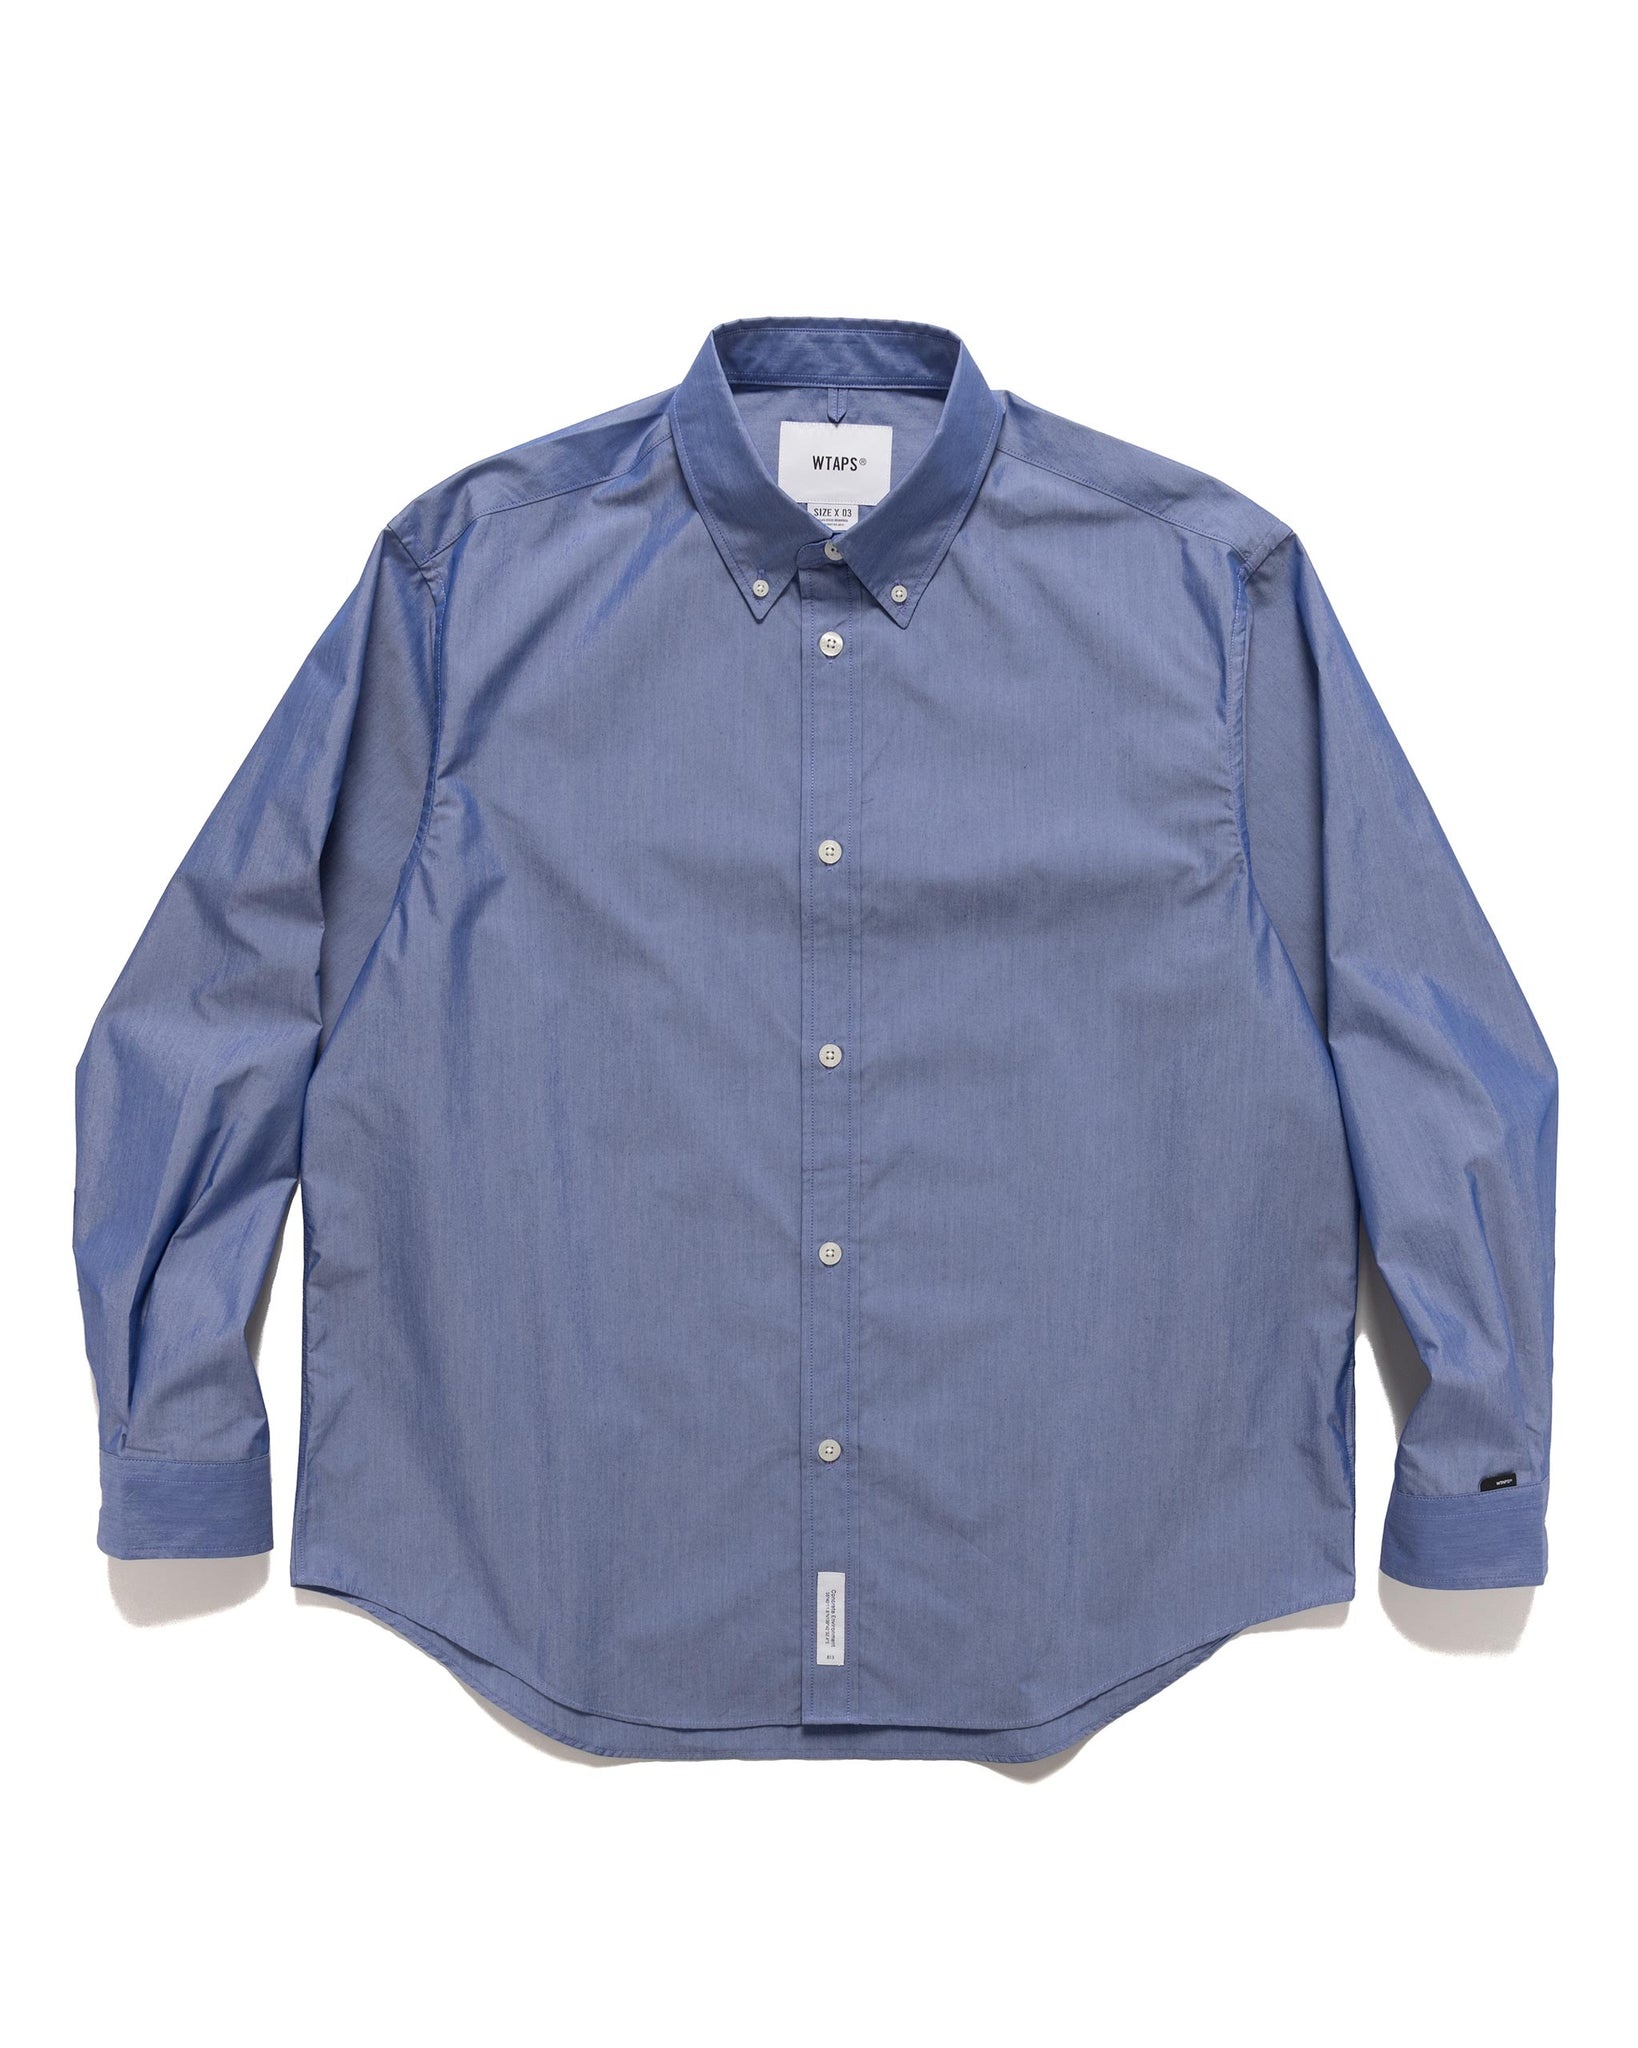 WTAPS BD 01 / LS / Broadcloth COOLMAX Shirt BLUE | REVERSIBLE